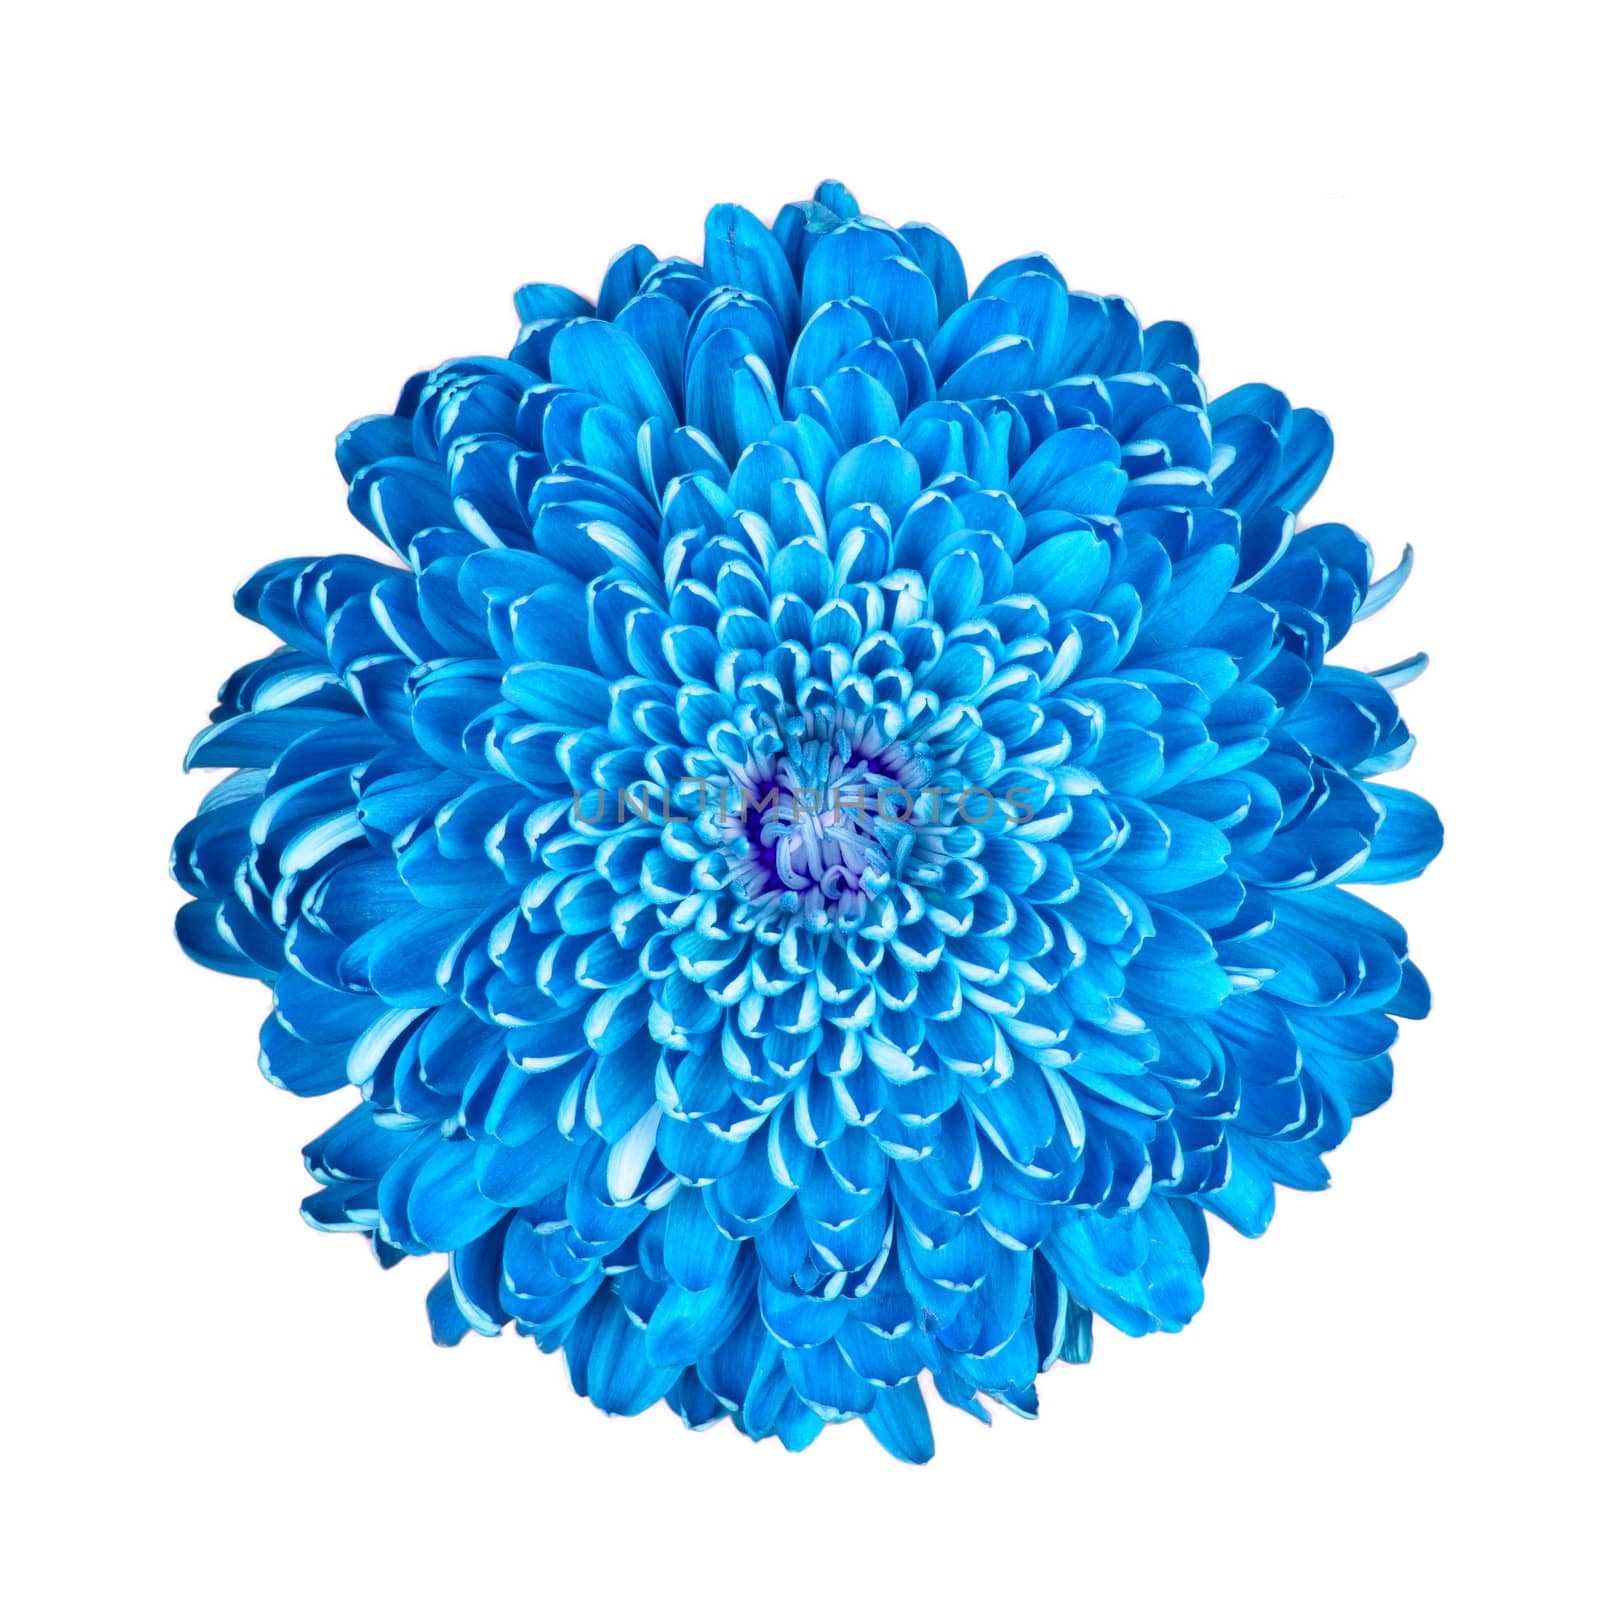 Blue chrysanthemum by michaklootwijk